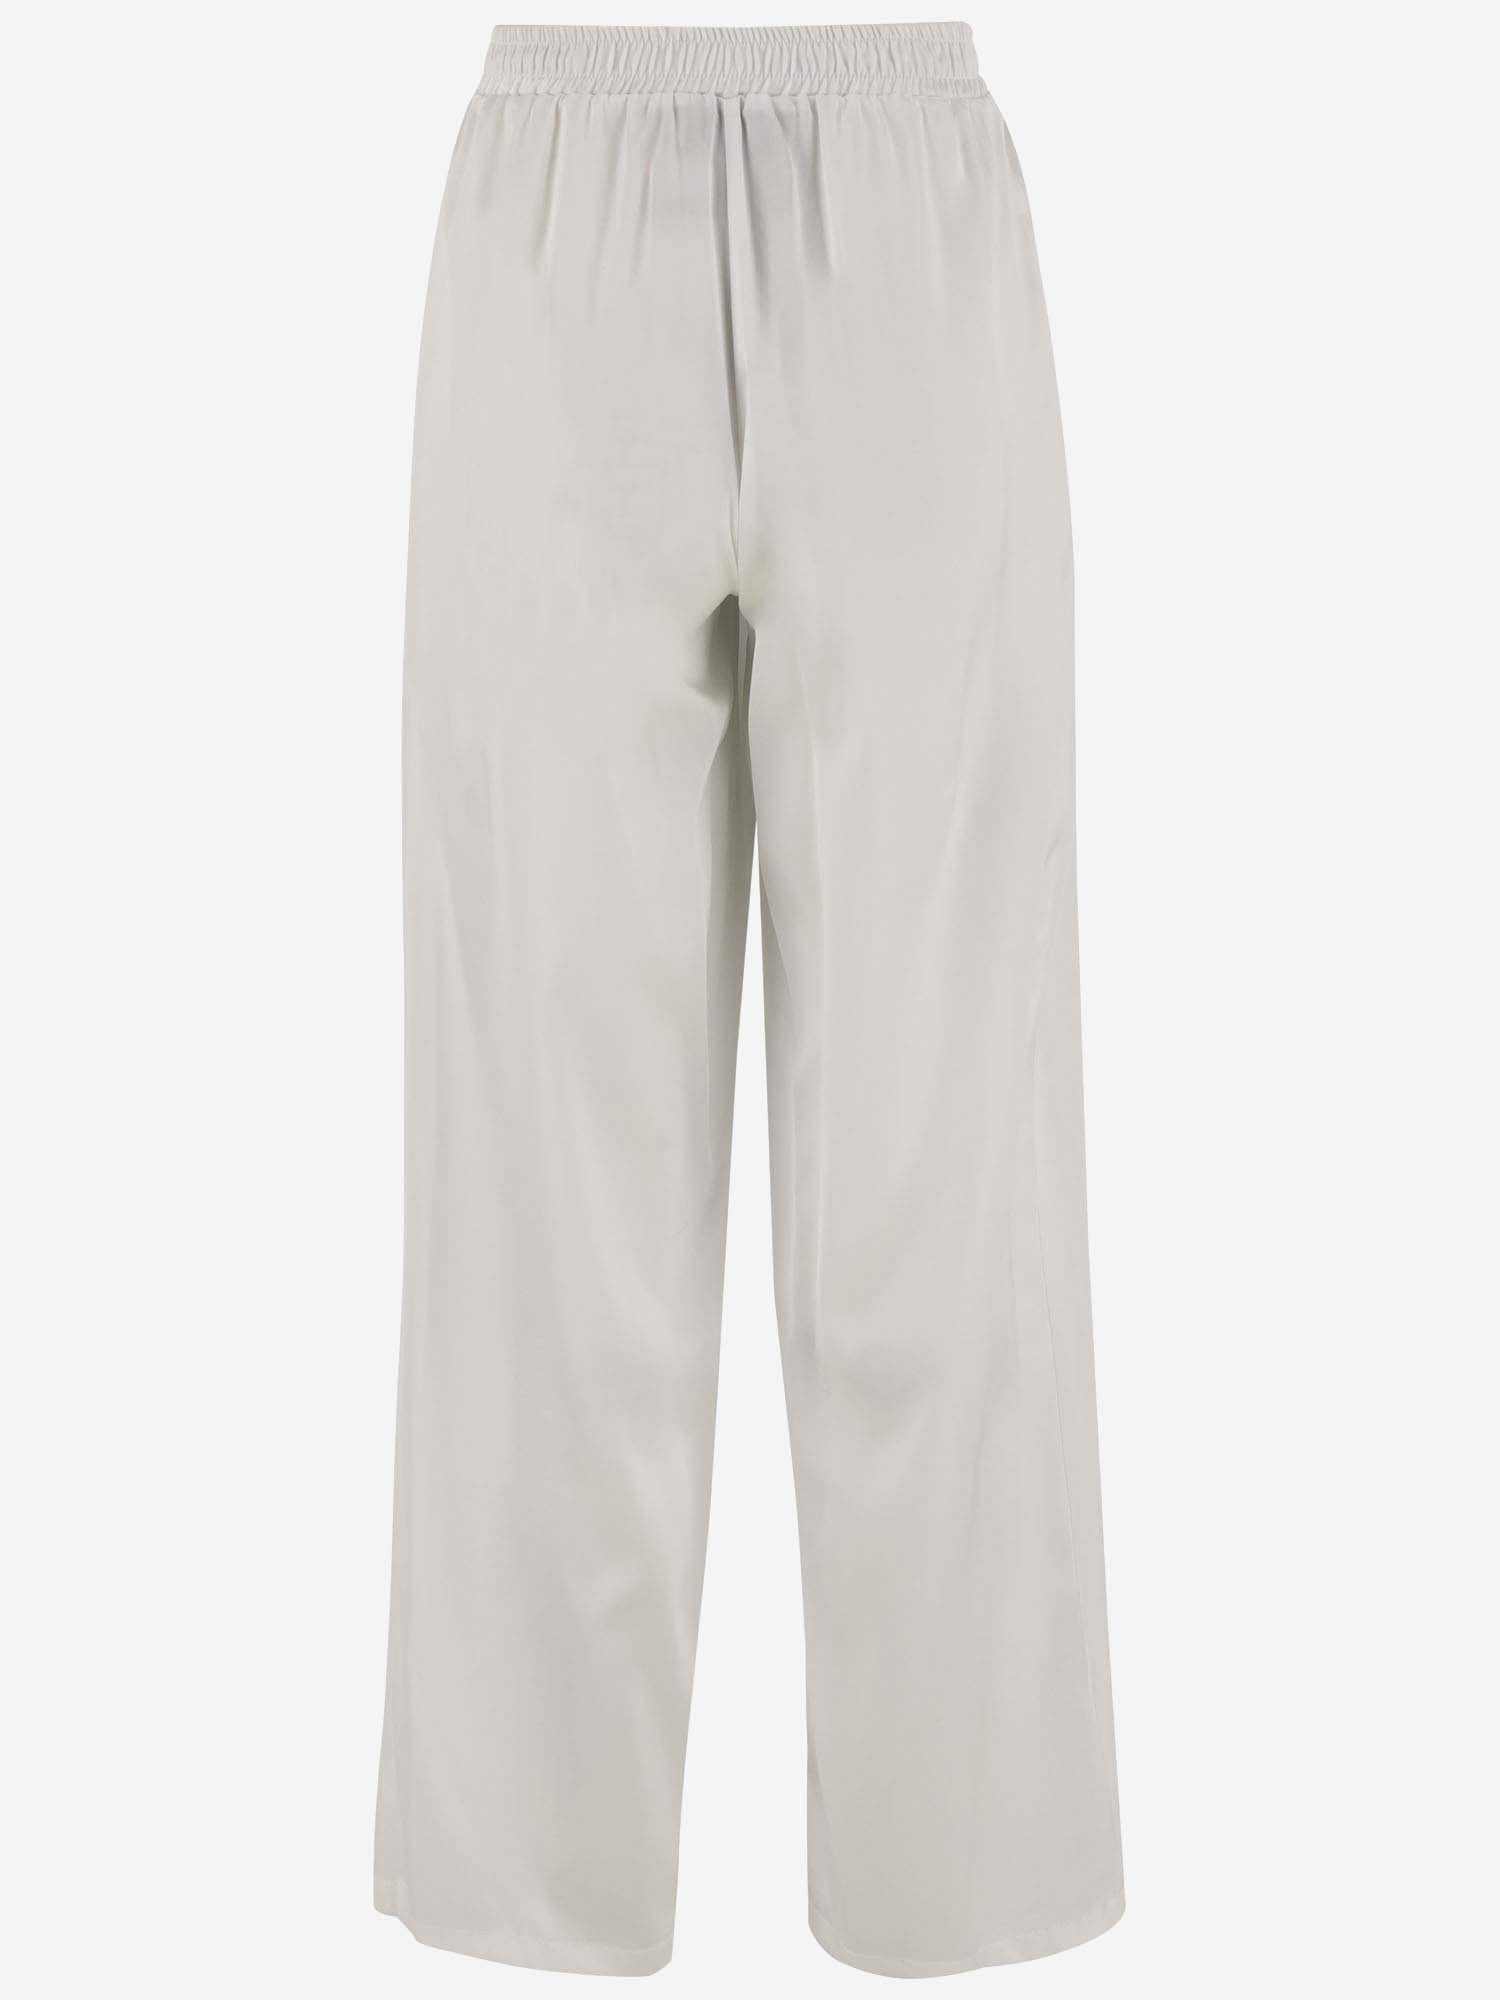 Shop Wild Cashmere Stretch Silk Pants